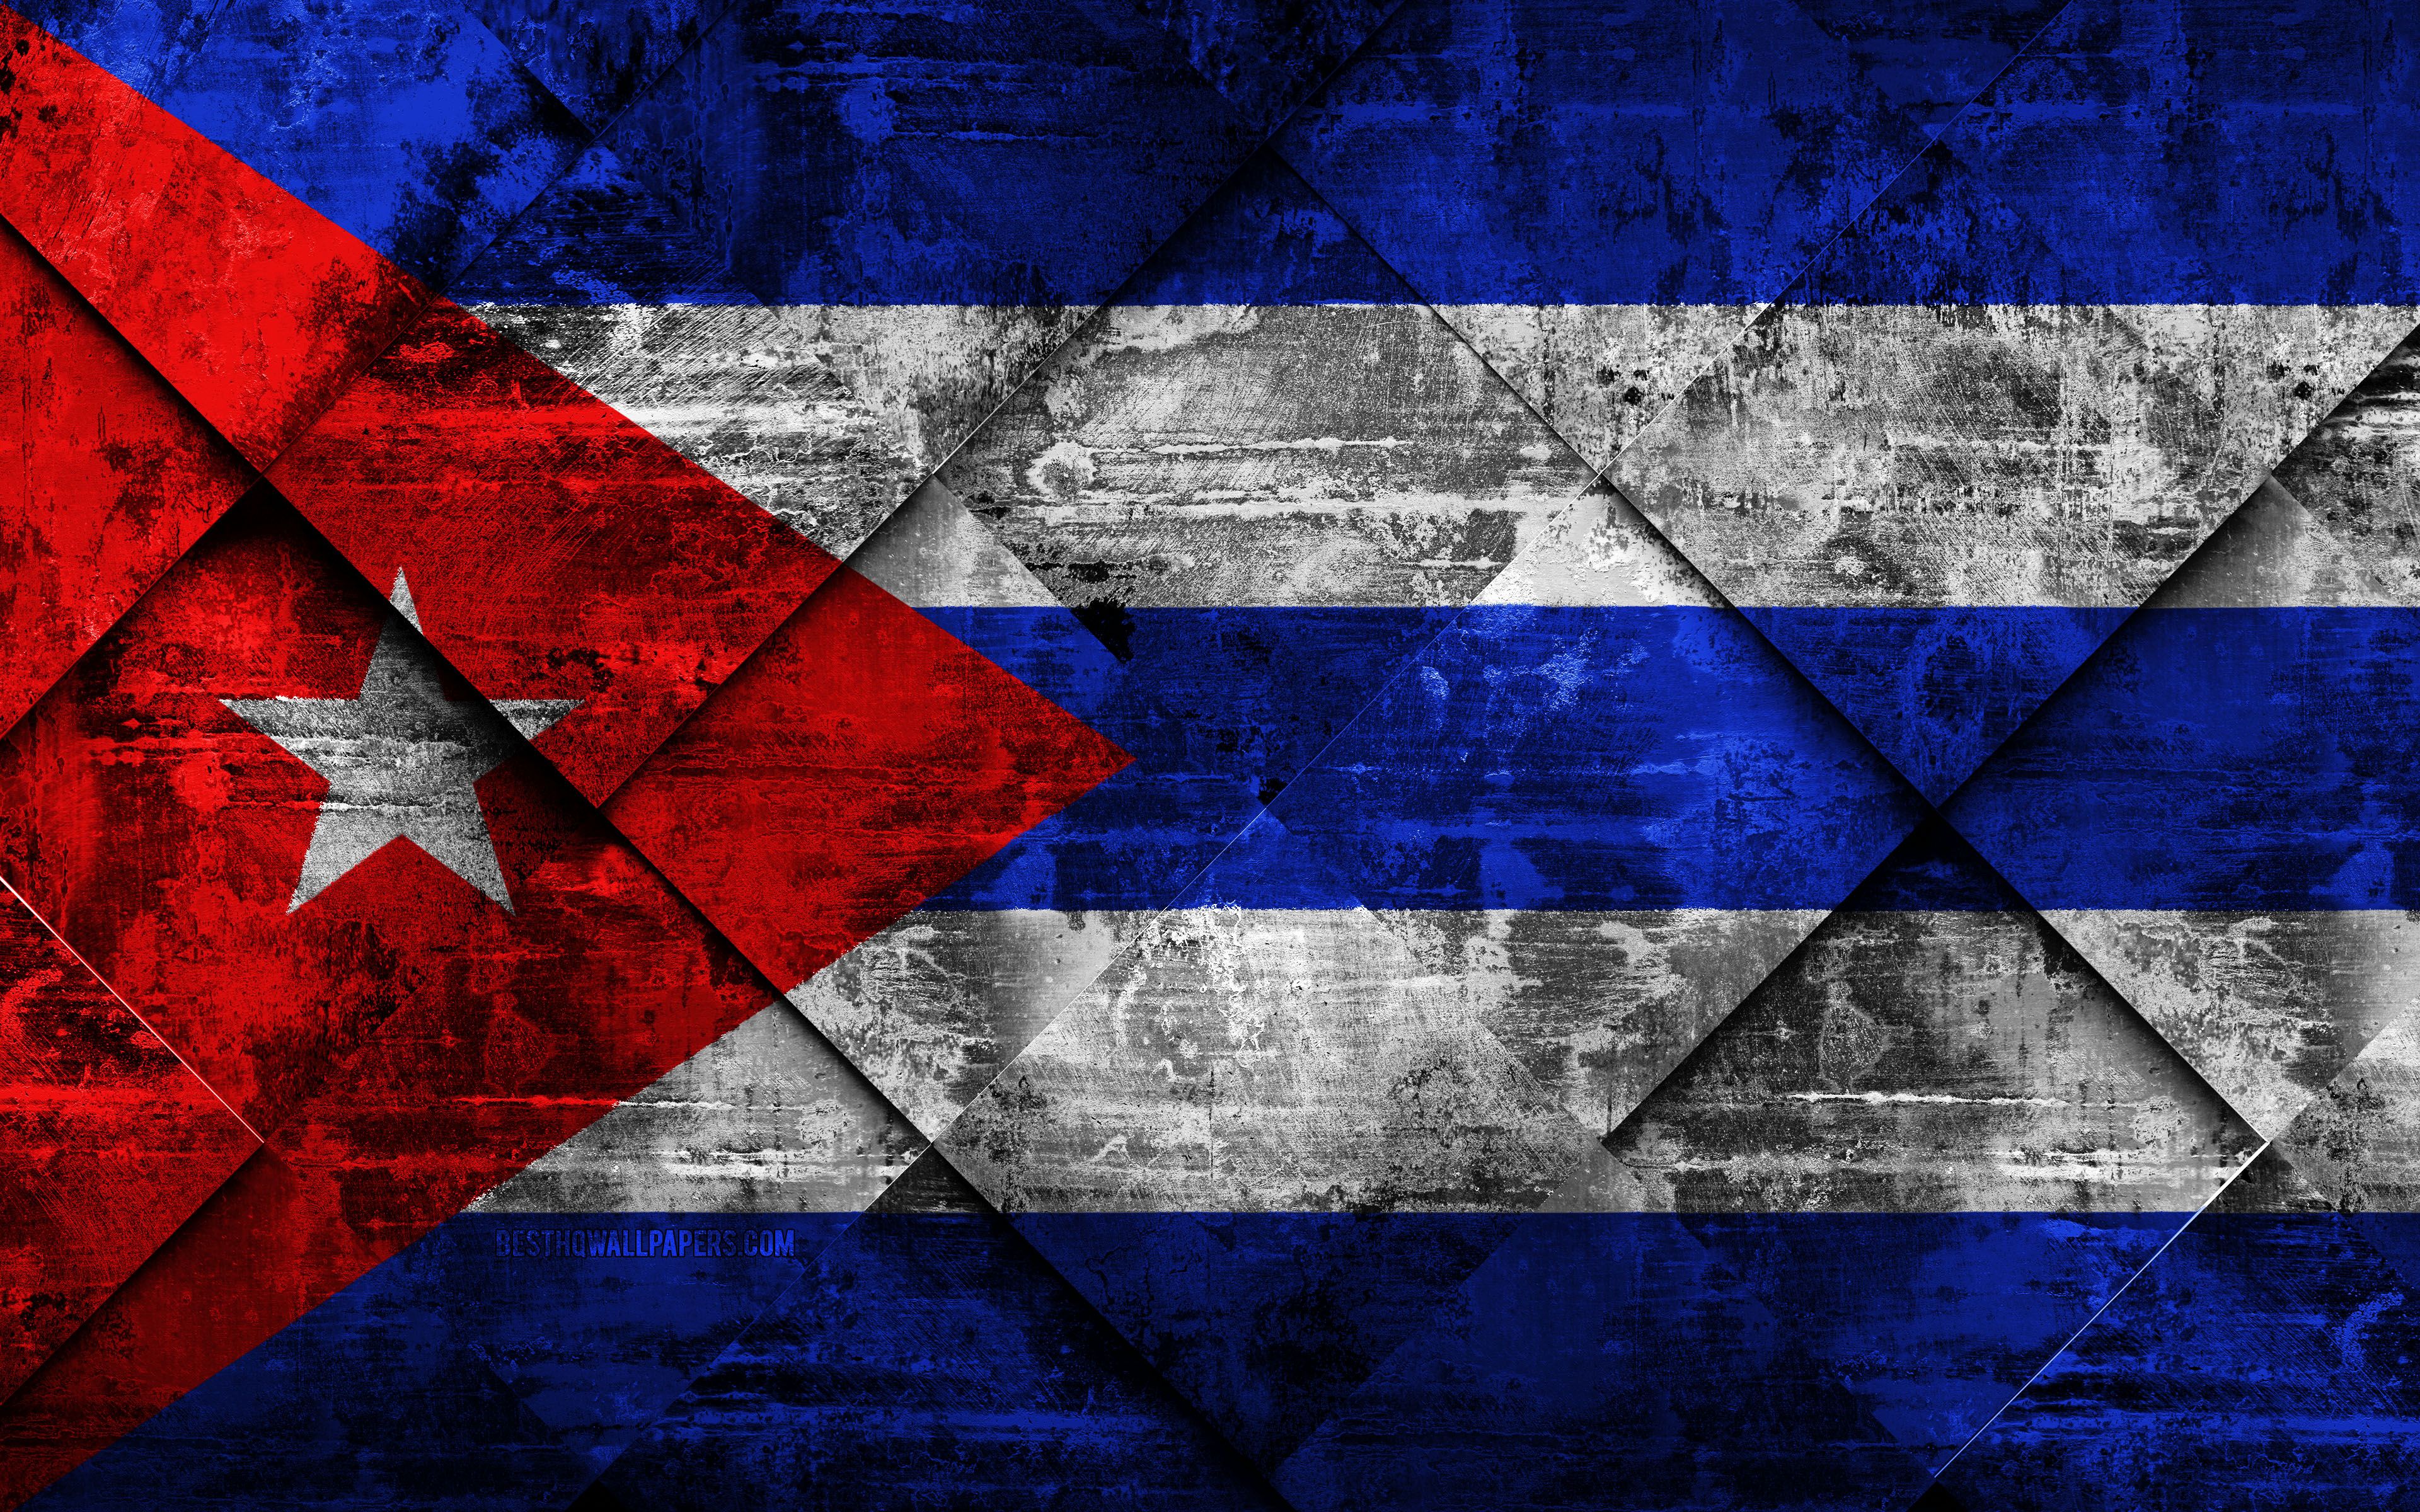 Download wallpaper Flag of Cuba, 4k, grunge art, rhombus grunge texture, Cuban flag, North America, national symbols, Cuba, creative art for desktop with resolution 3840x2400. High Quality HD picture wallpaper